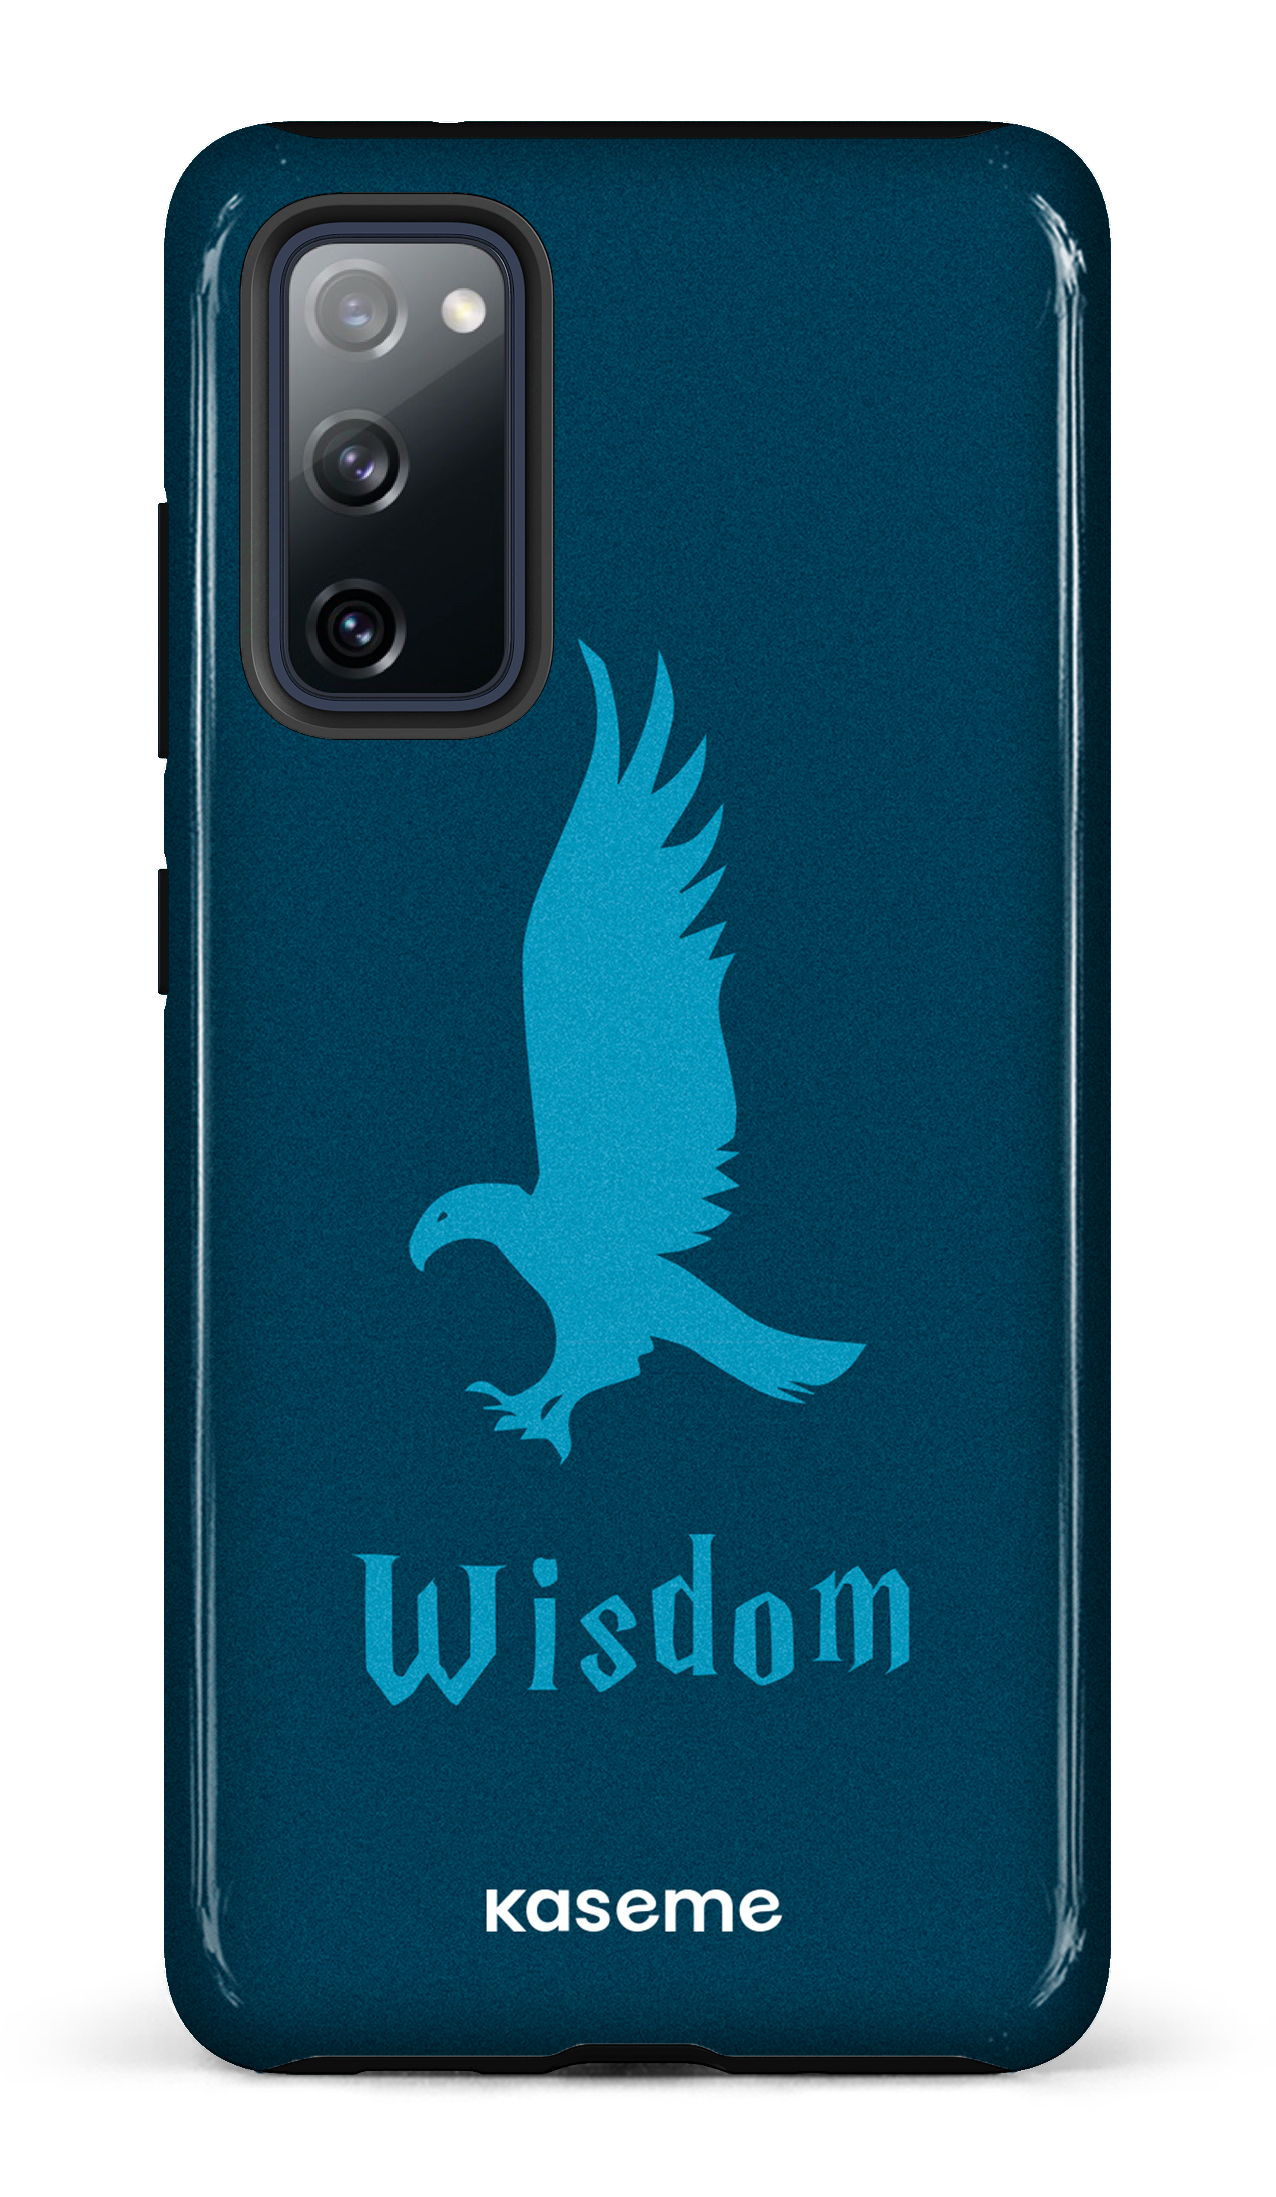 Wisdom - Galaxy S20 FE